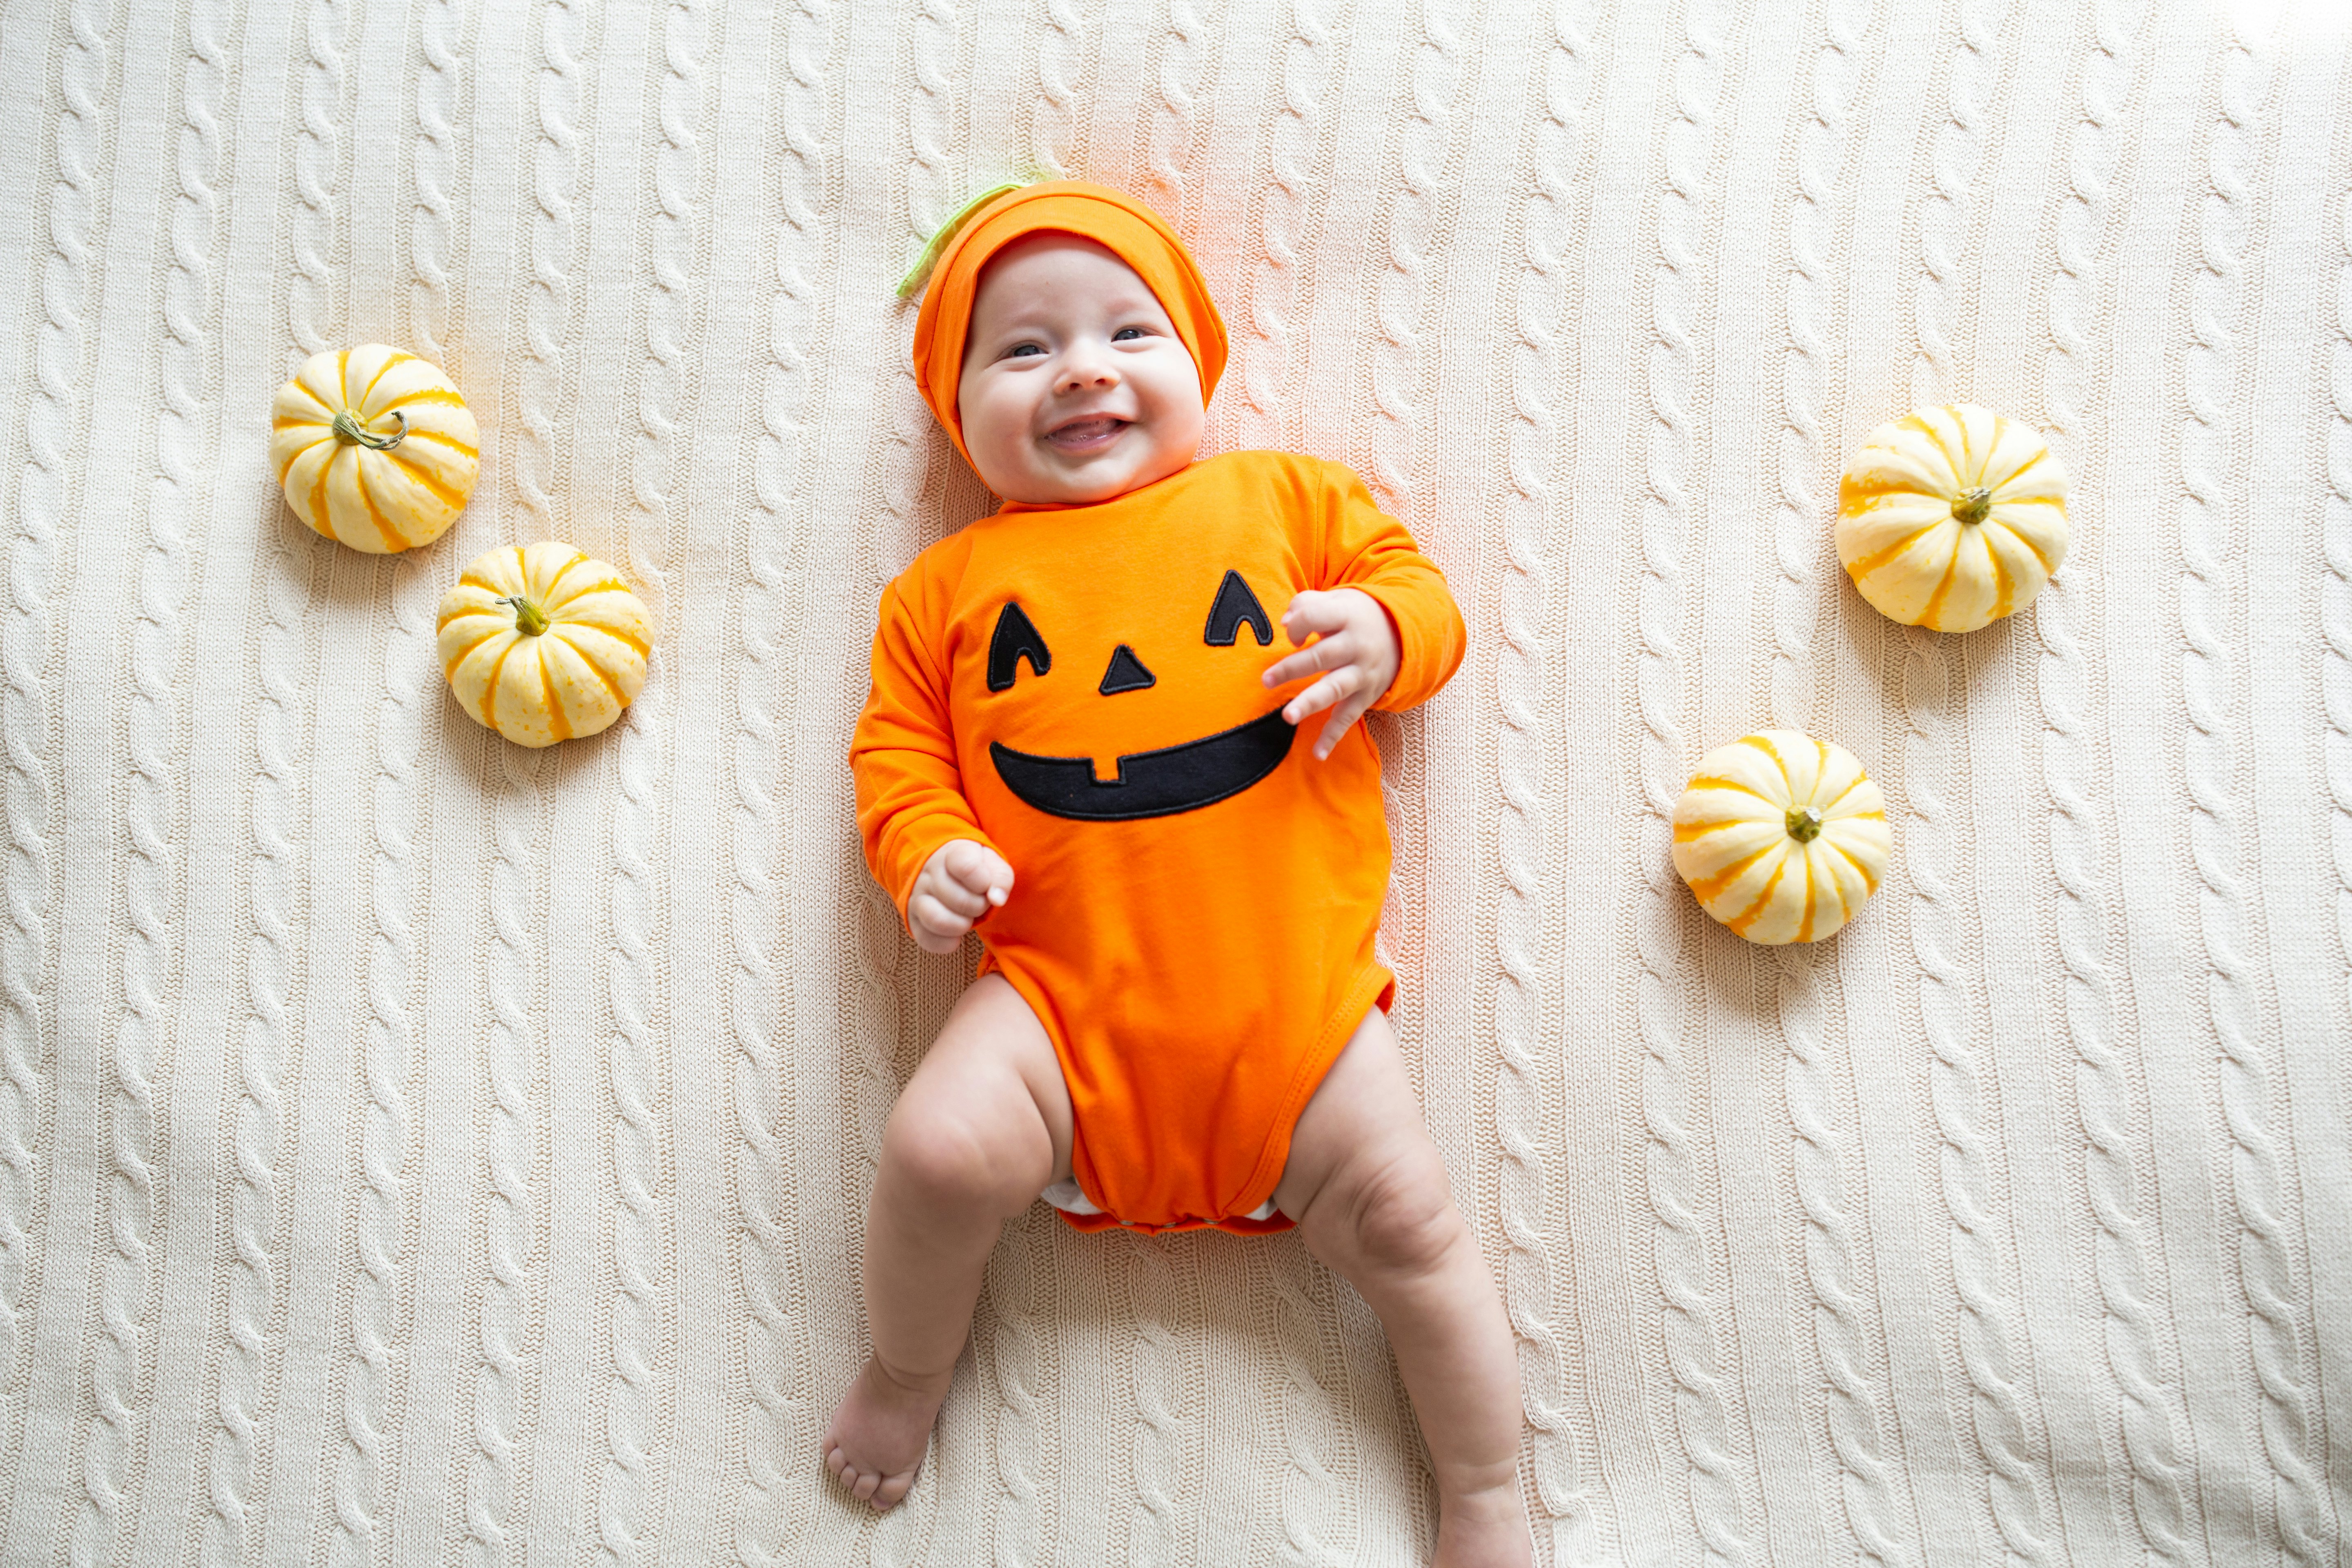 Halloween Michael Myers & Pumpkin Pajama Pants, Hot Topic